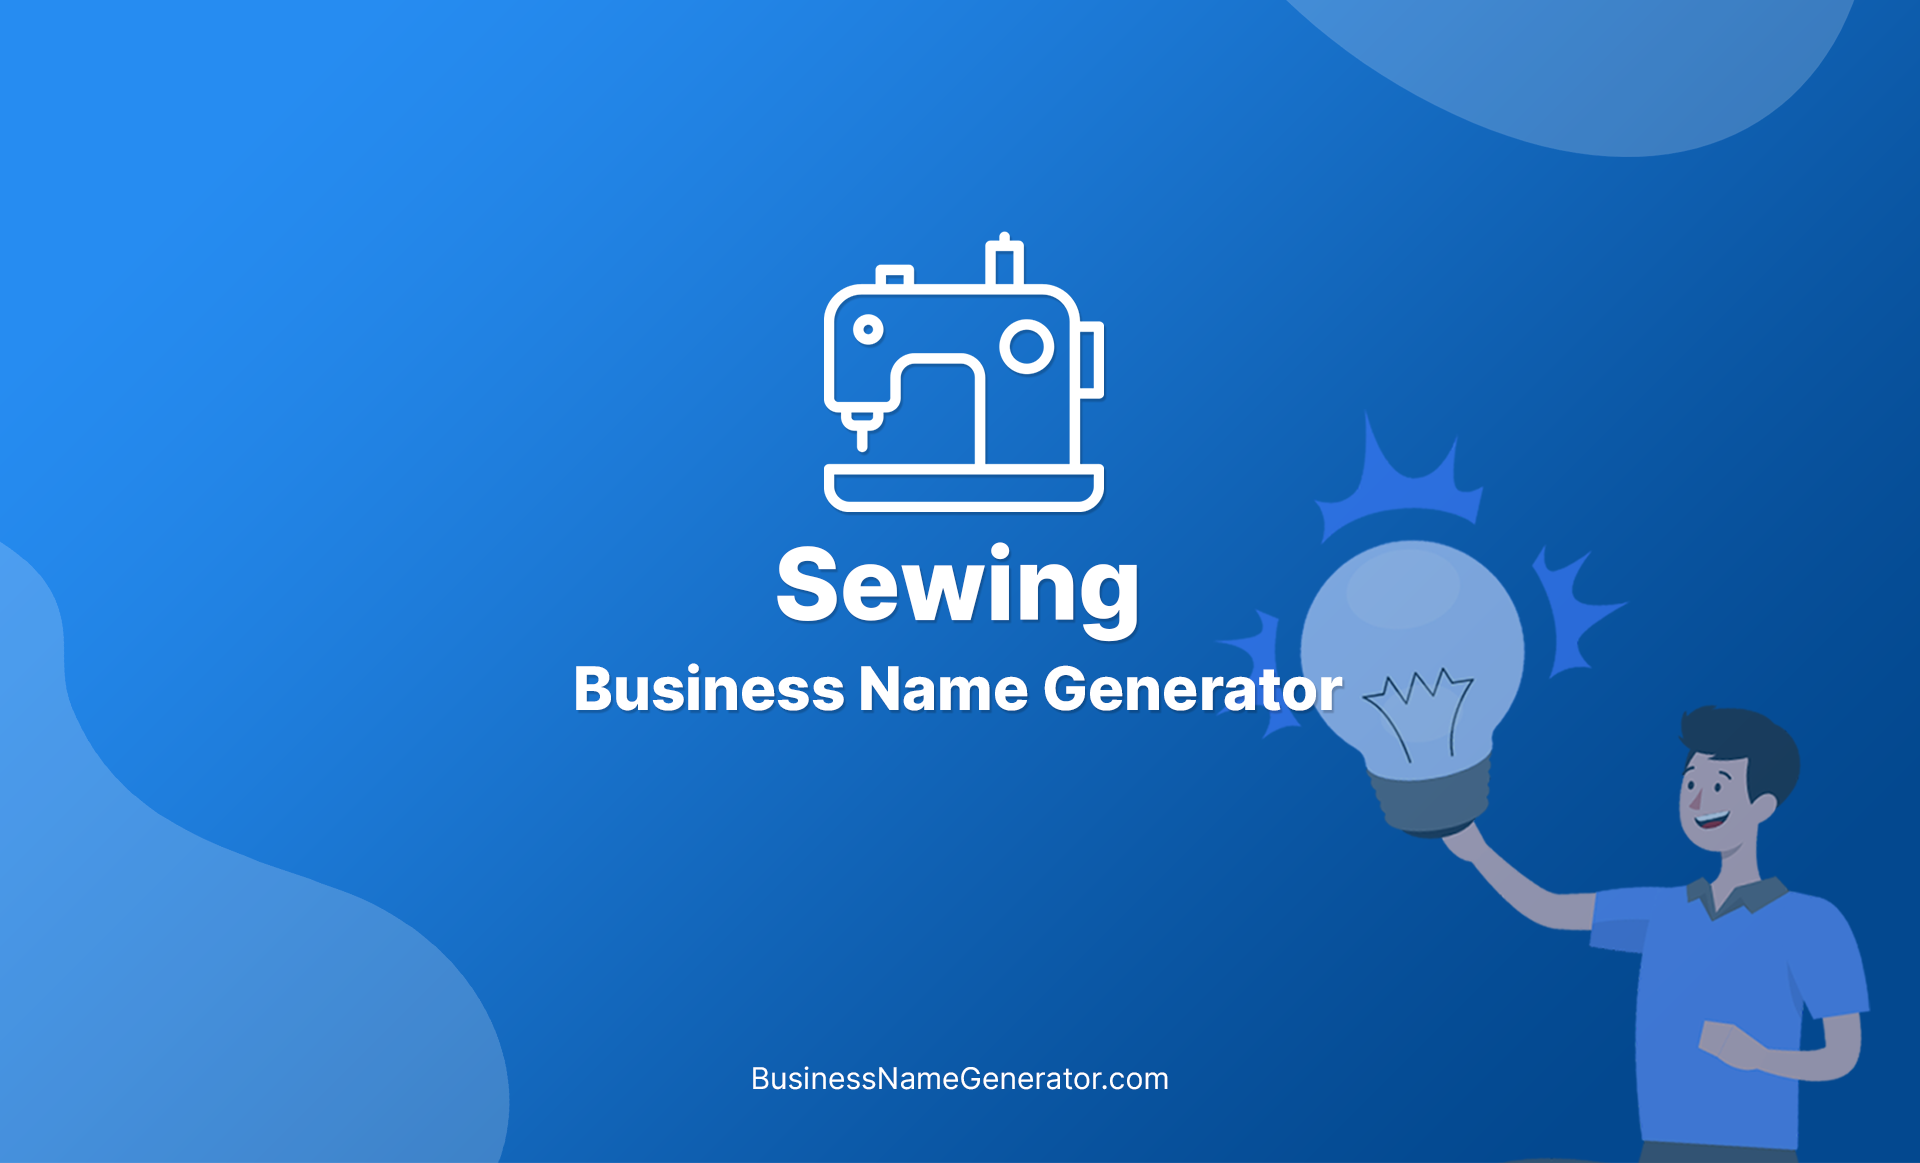 Sewing Business Name Generator